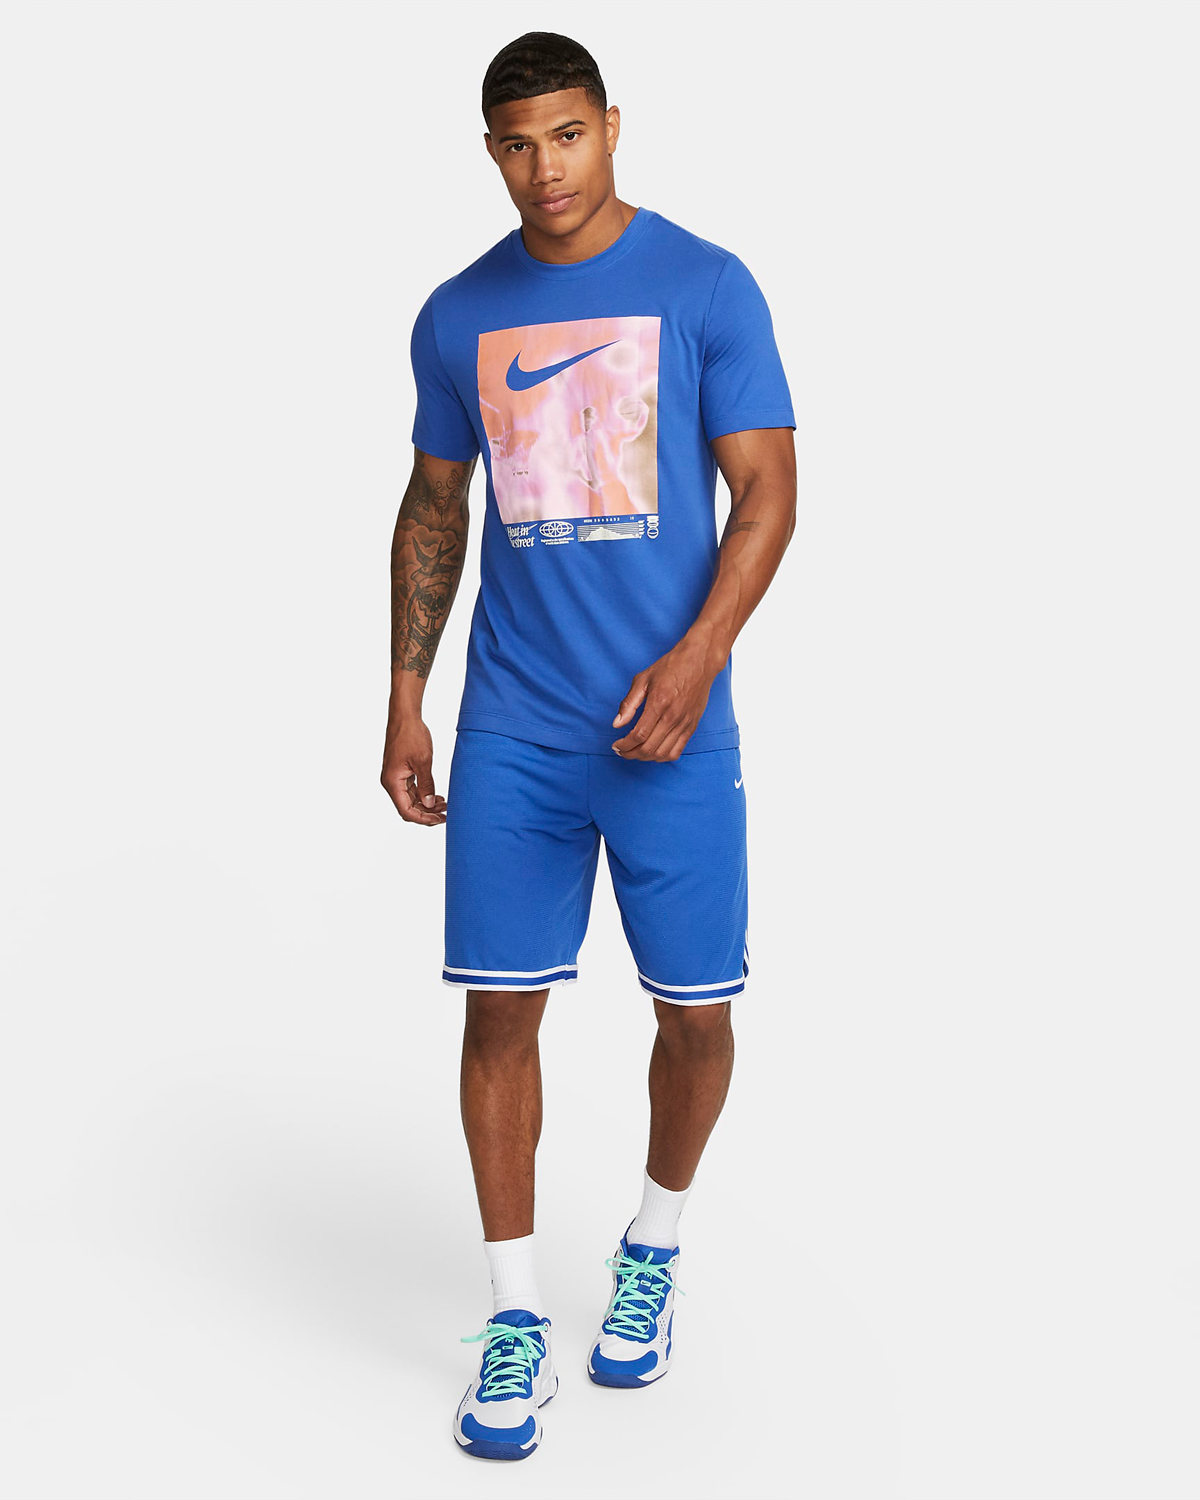 Nike-Basketball-T-Shirt-Game-Royal-Outfit